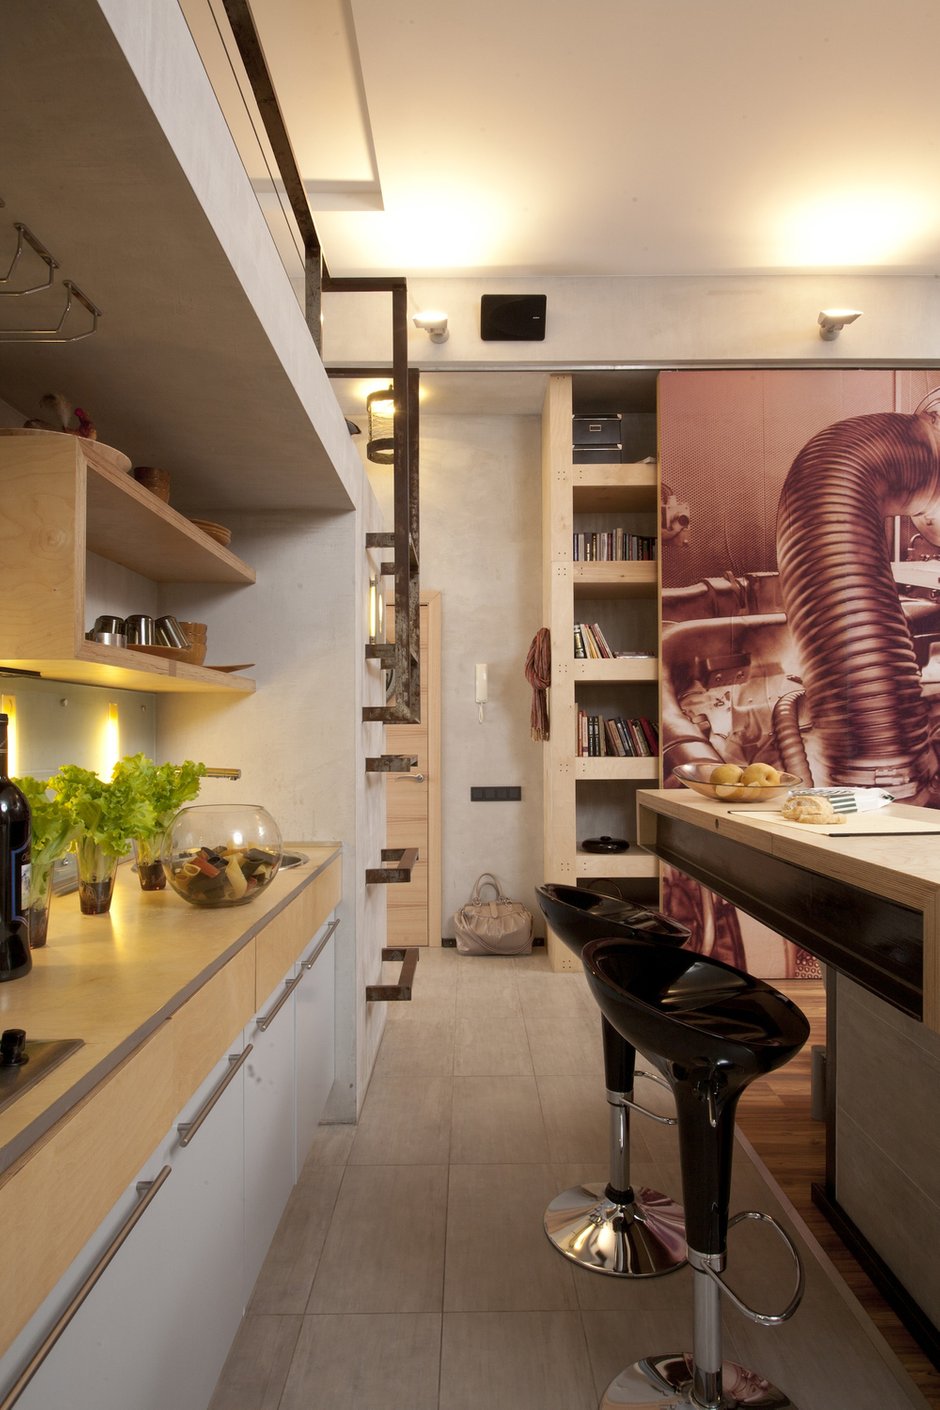 Фотография: Кухня и столовая в стиле Лофт, Квартира, Дома и квартиры – фото на INMYROOM